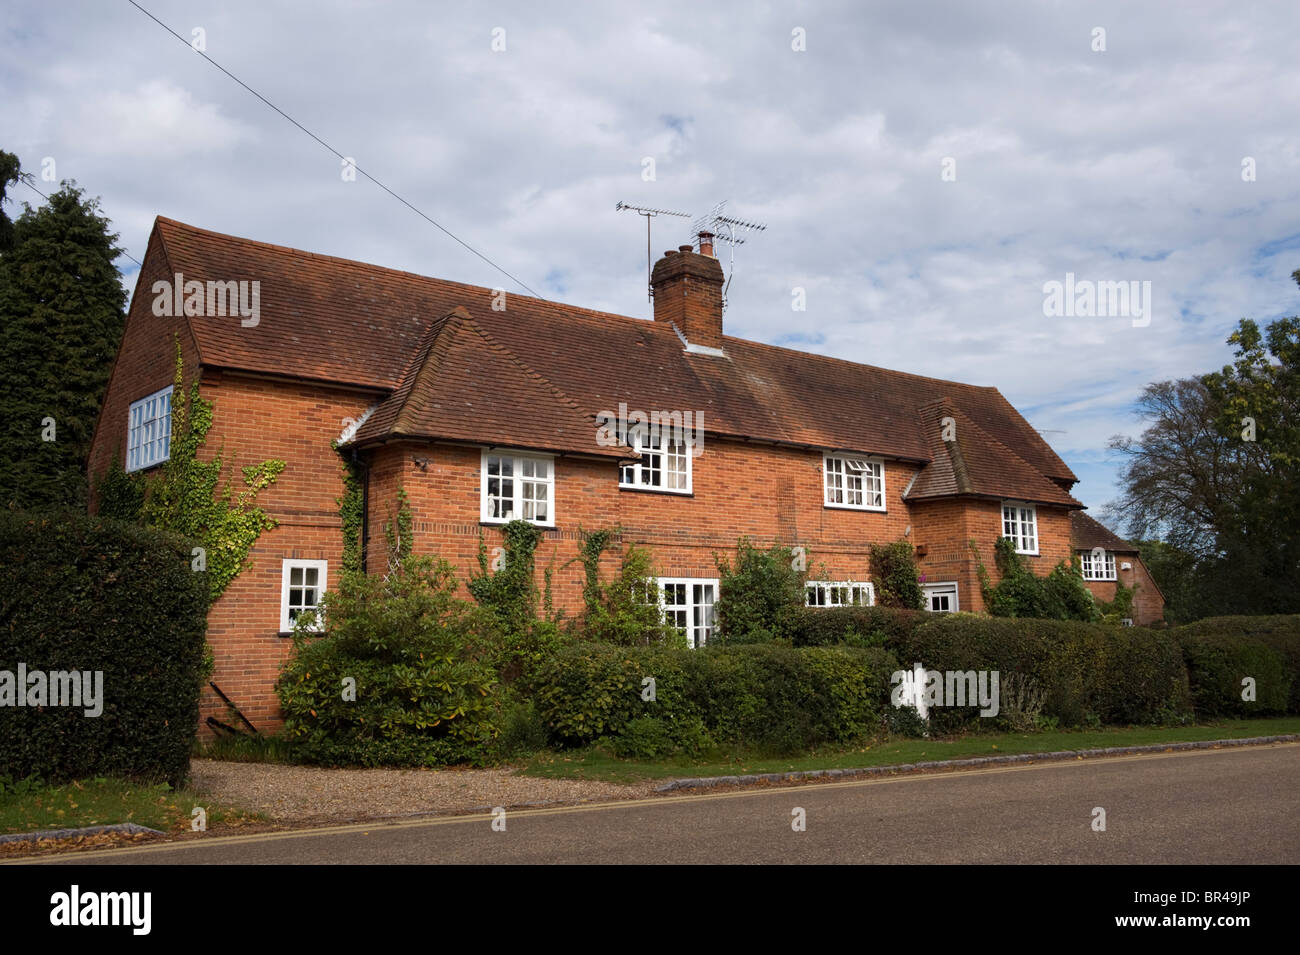 traditional red brick built semi detached houses in the Quaker village of Jordans Buckinghamshire UK Stock Photo